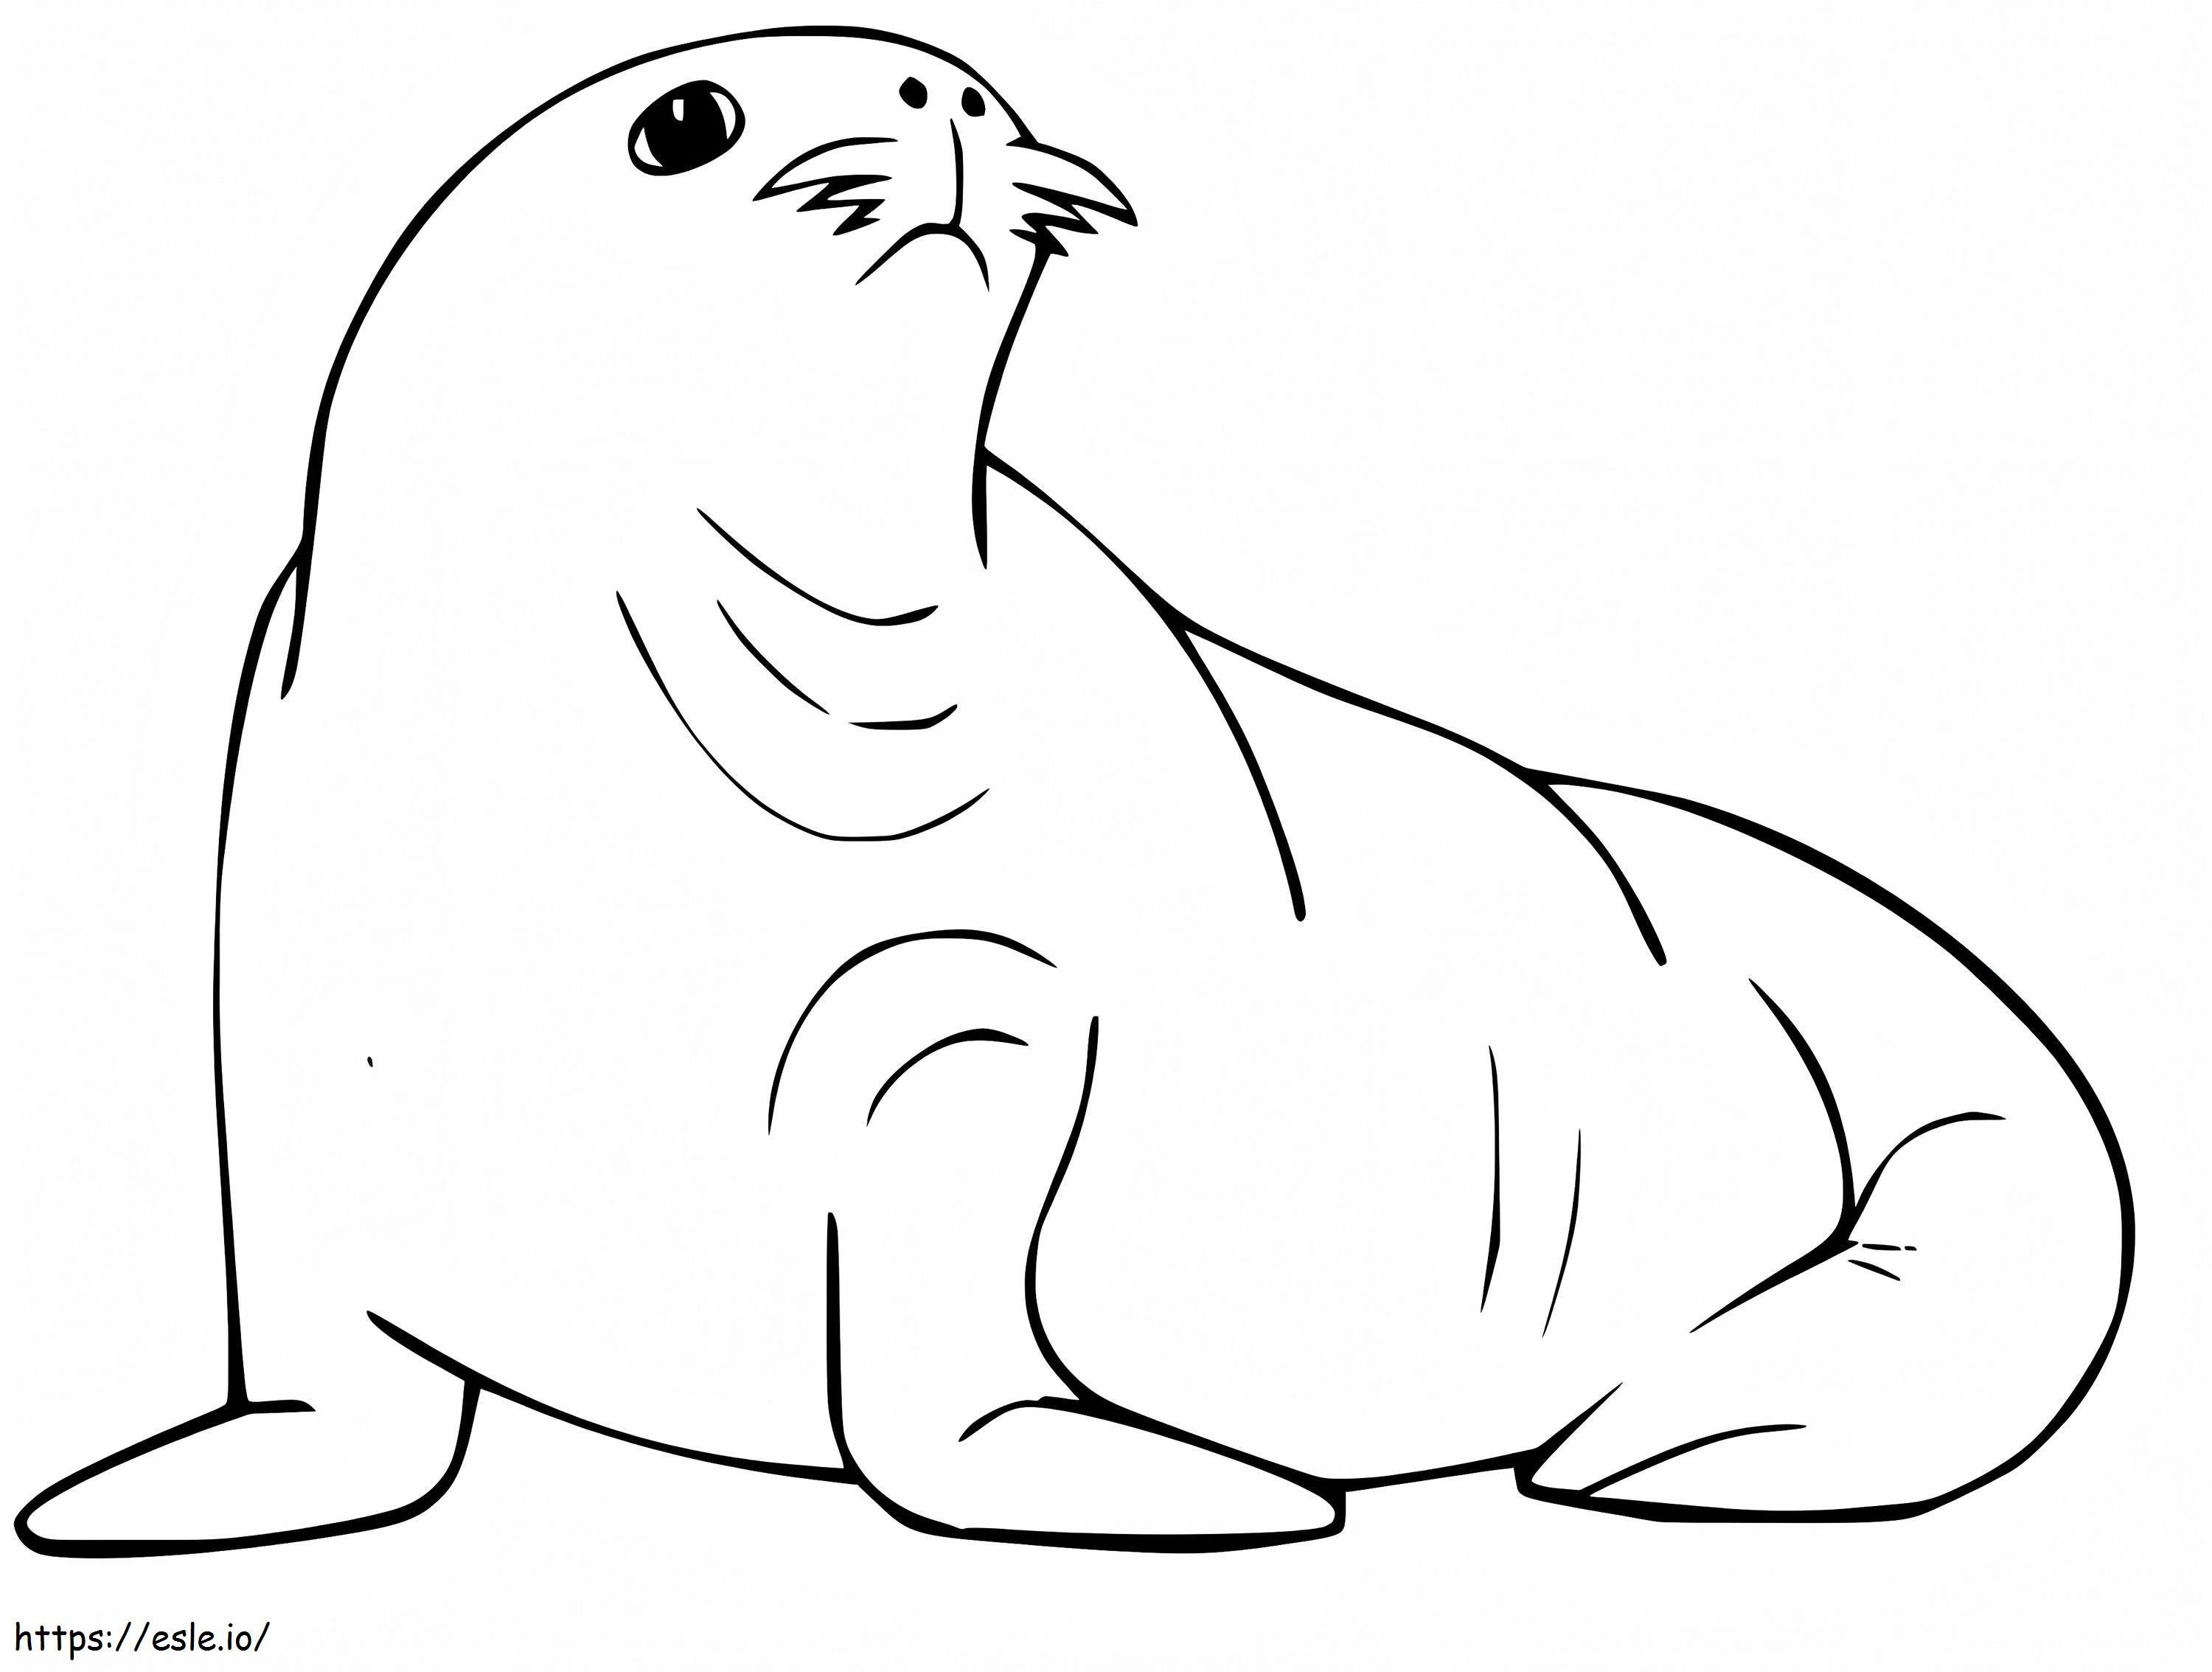 Fat Sea Lion coloring page